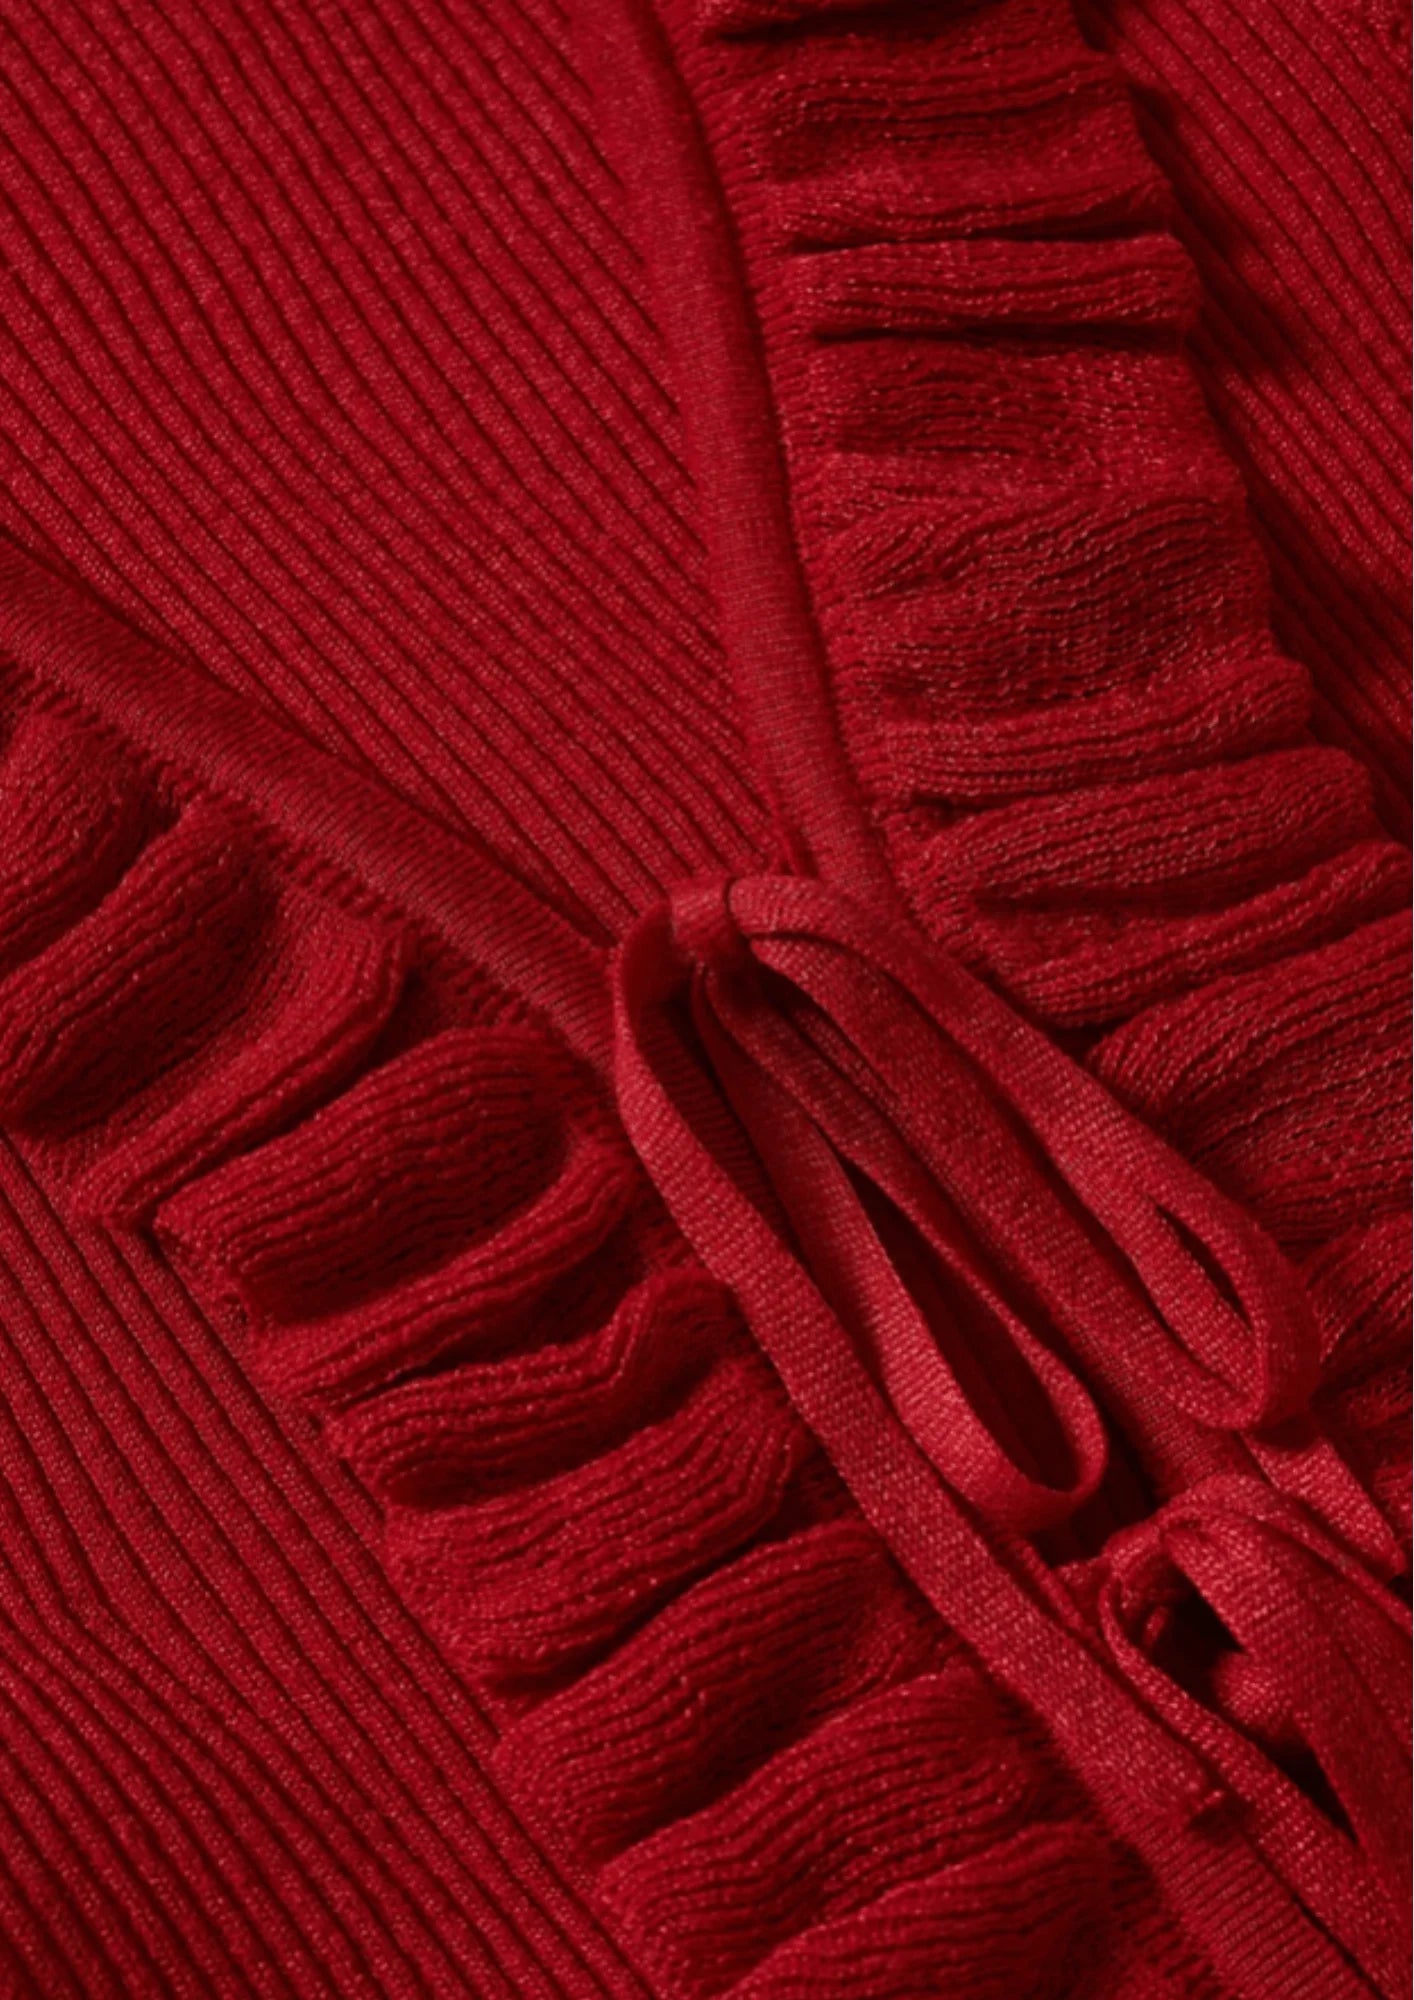 Cardigan en tricot rouge